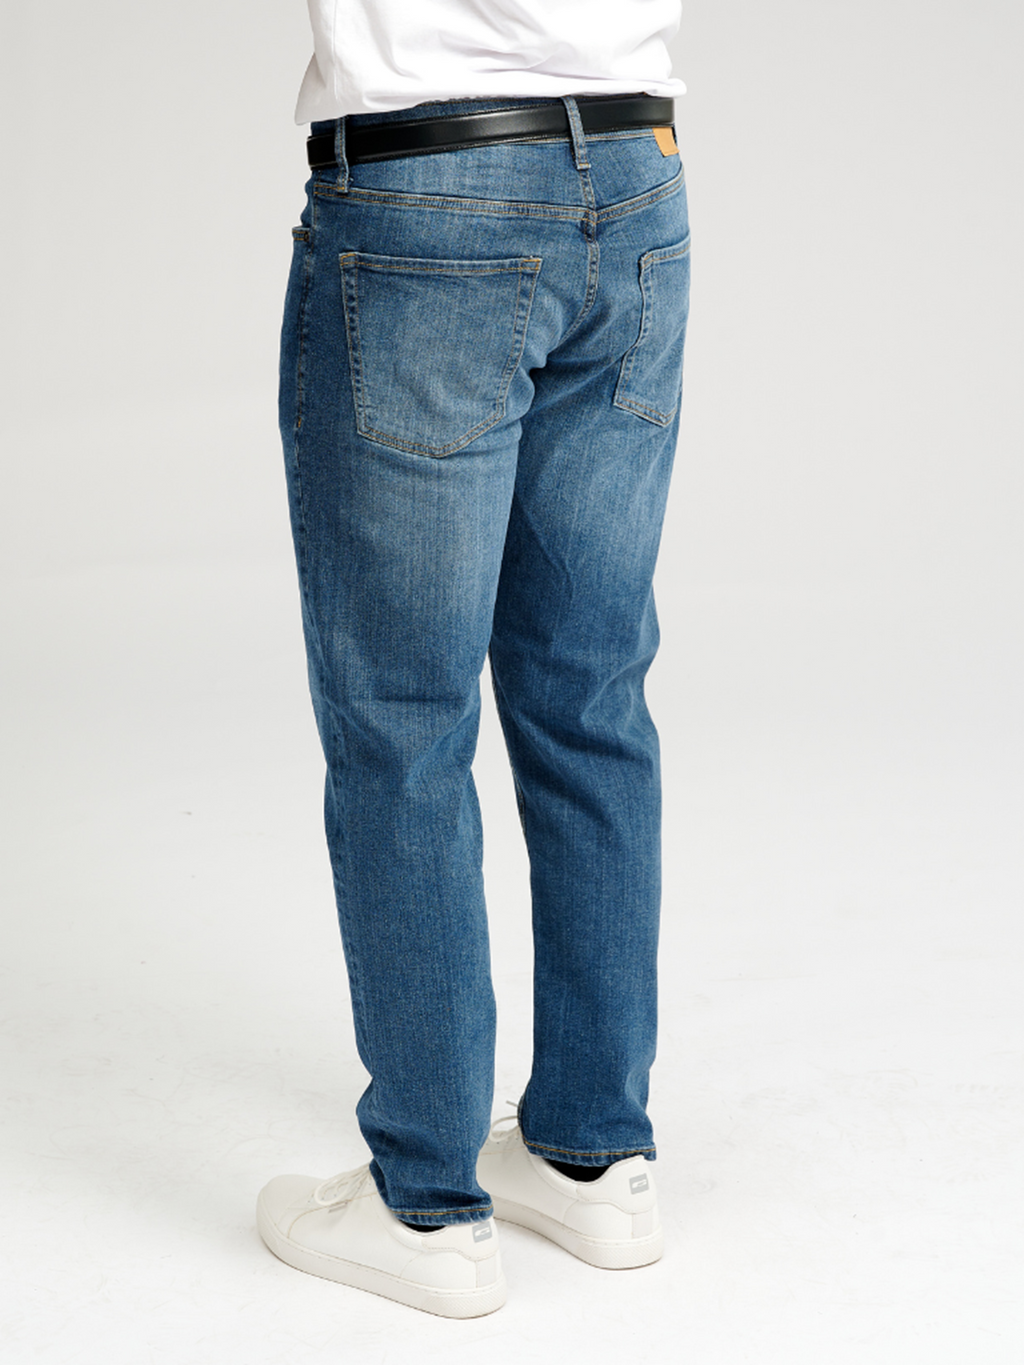 Performance Jeans (Regular) - Medium Blue Denim